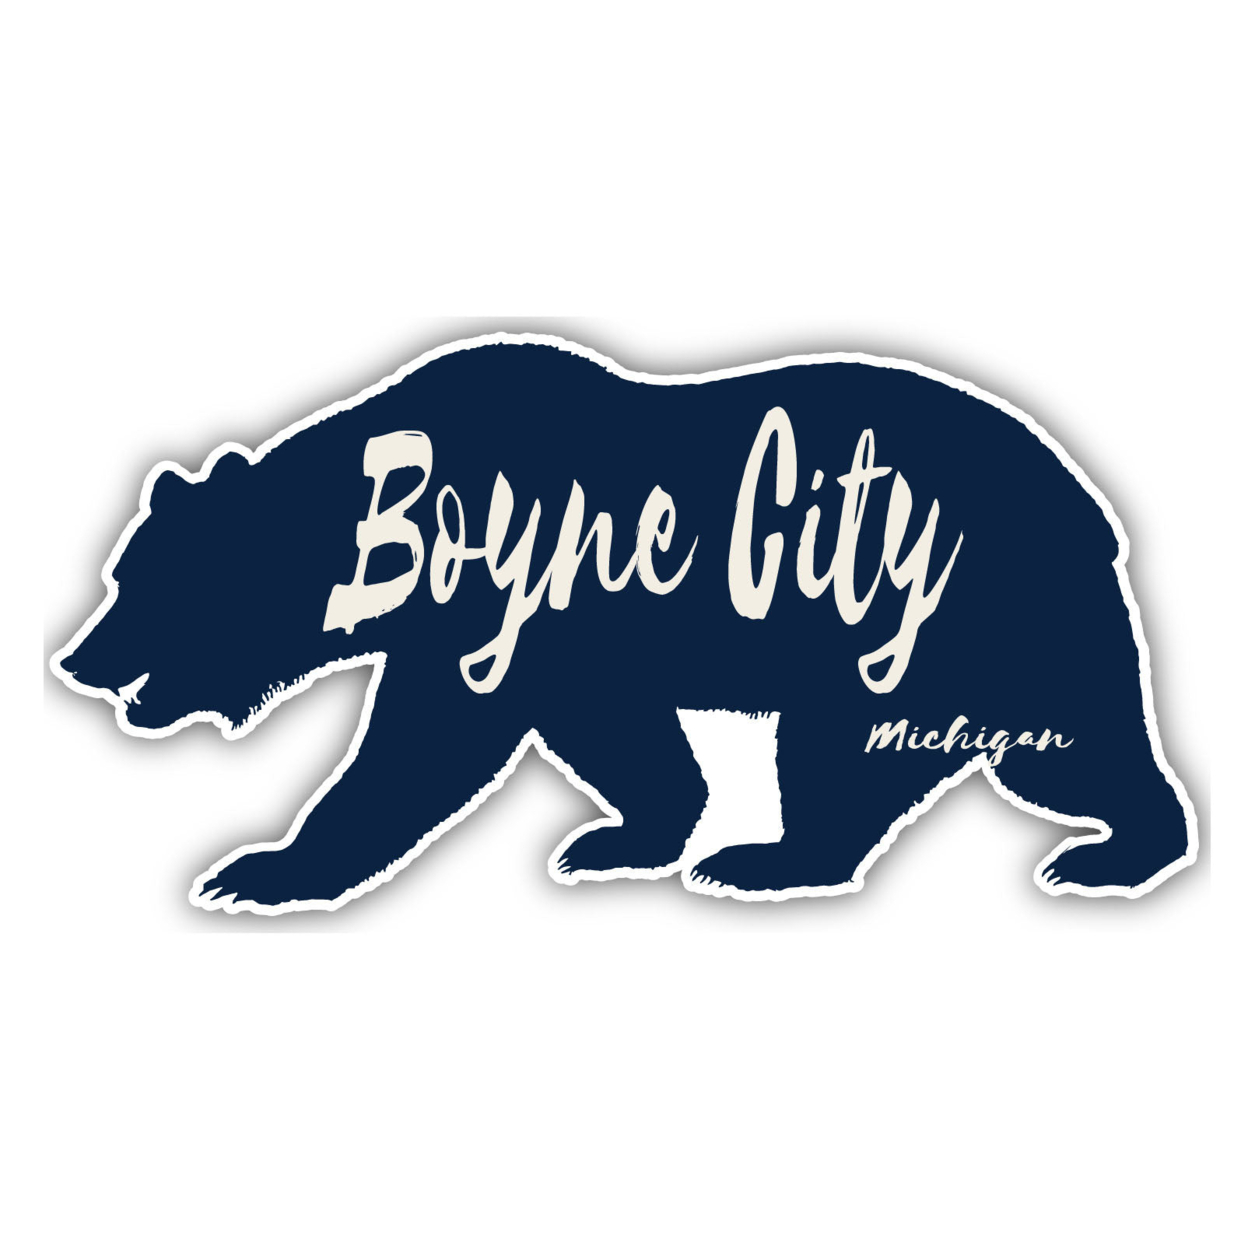 Boyne City Michigan Souvenir Decorative Stickers (Choose Theme And Size) - Single Unit, 6-Inch, Bear